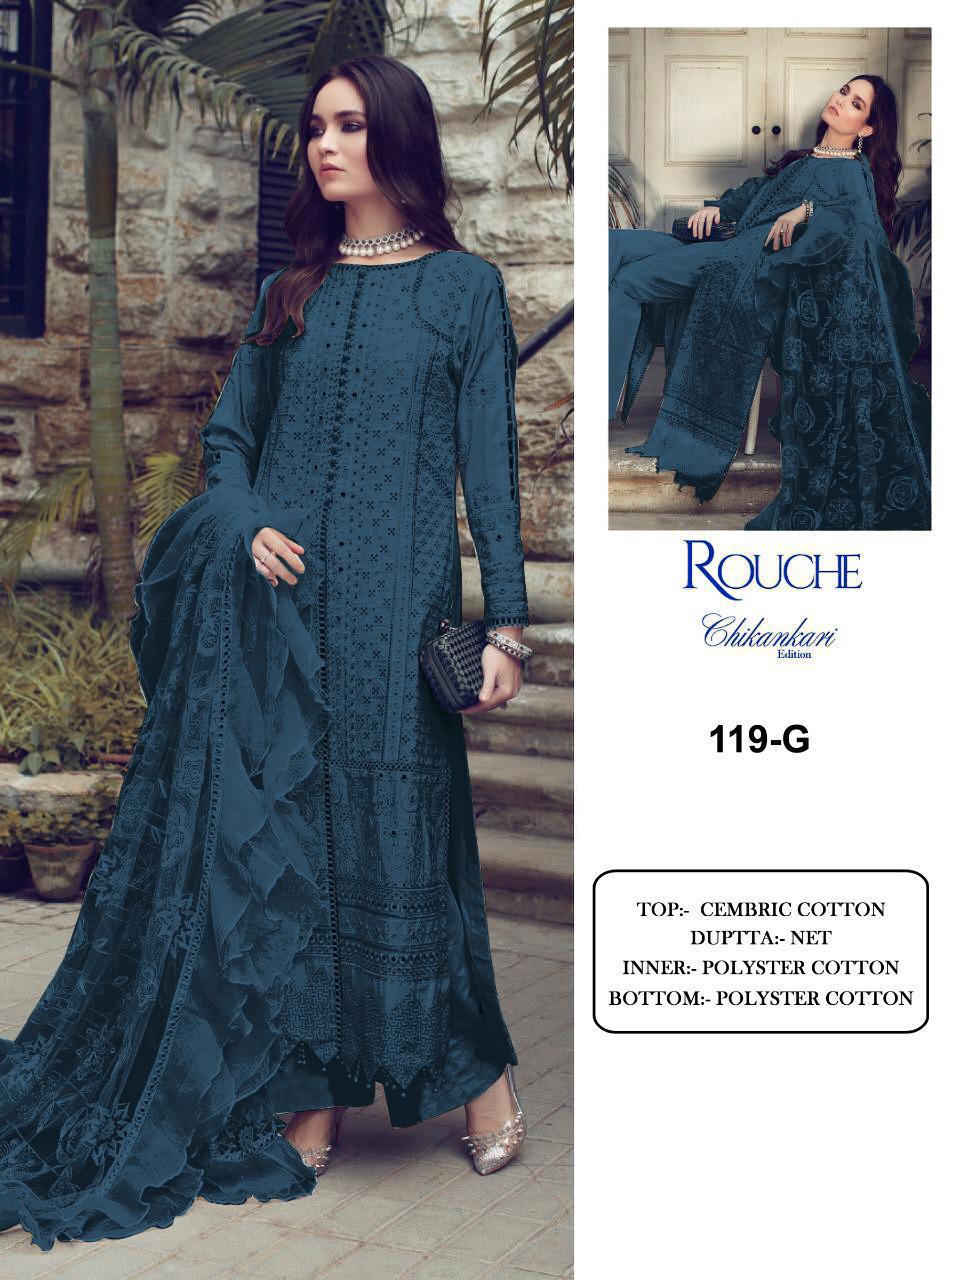 Pakistani Suits Rouche Chikankari Edition KF 119-G